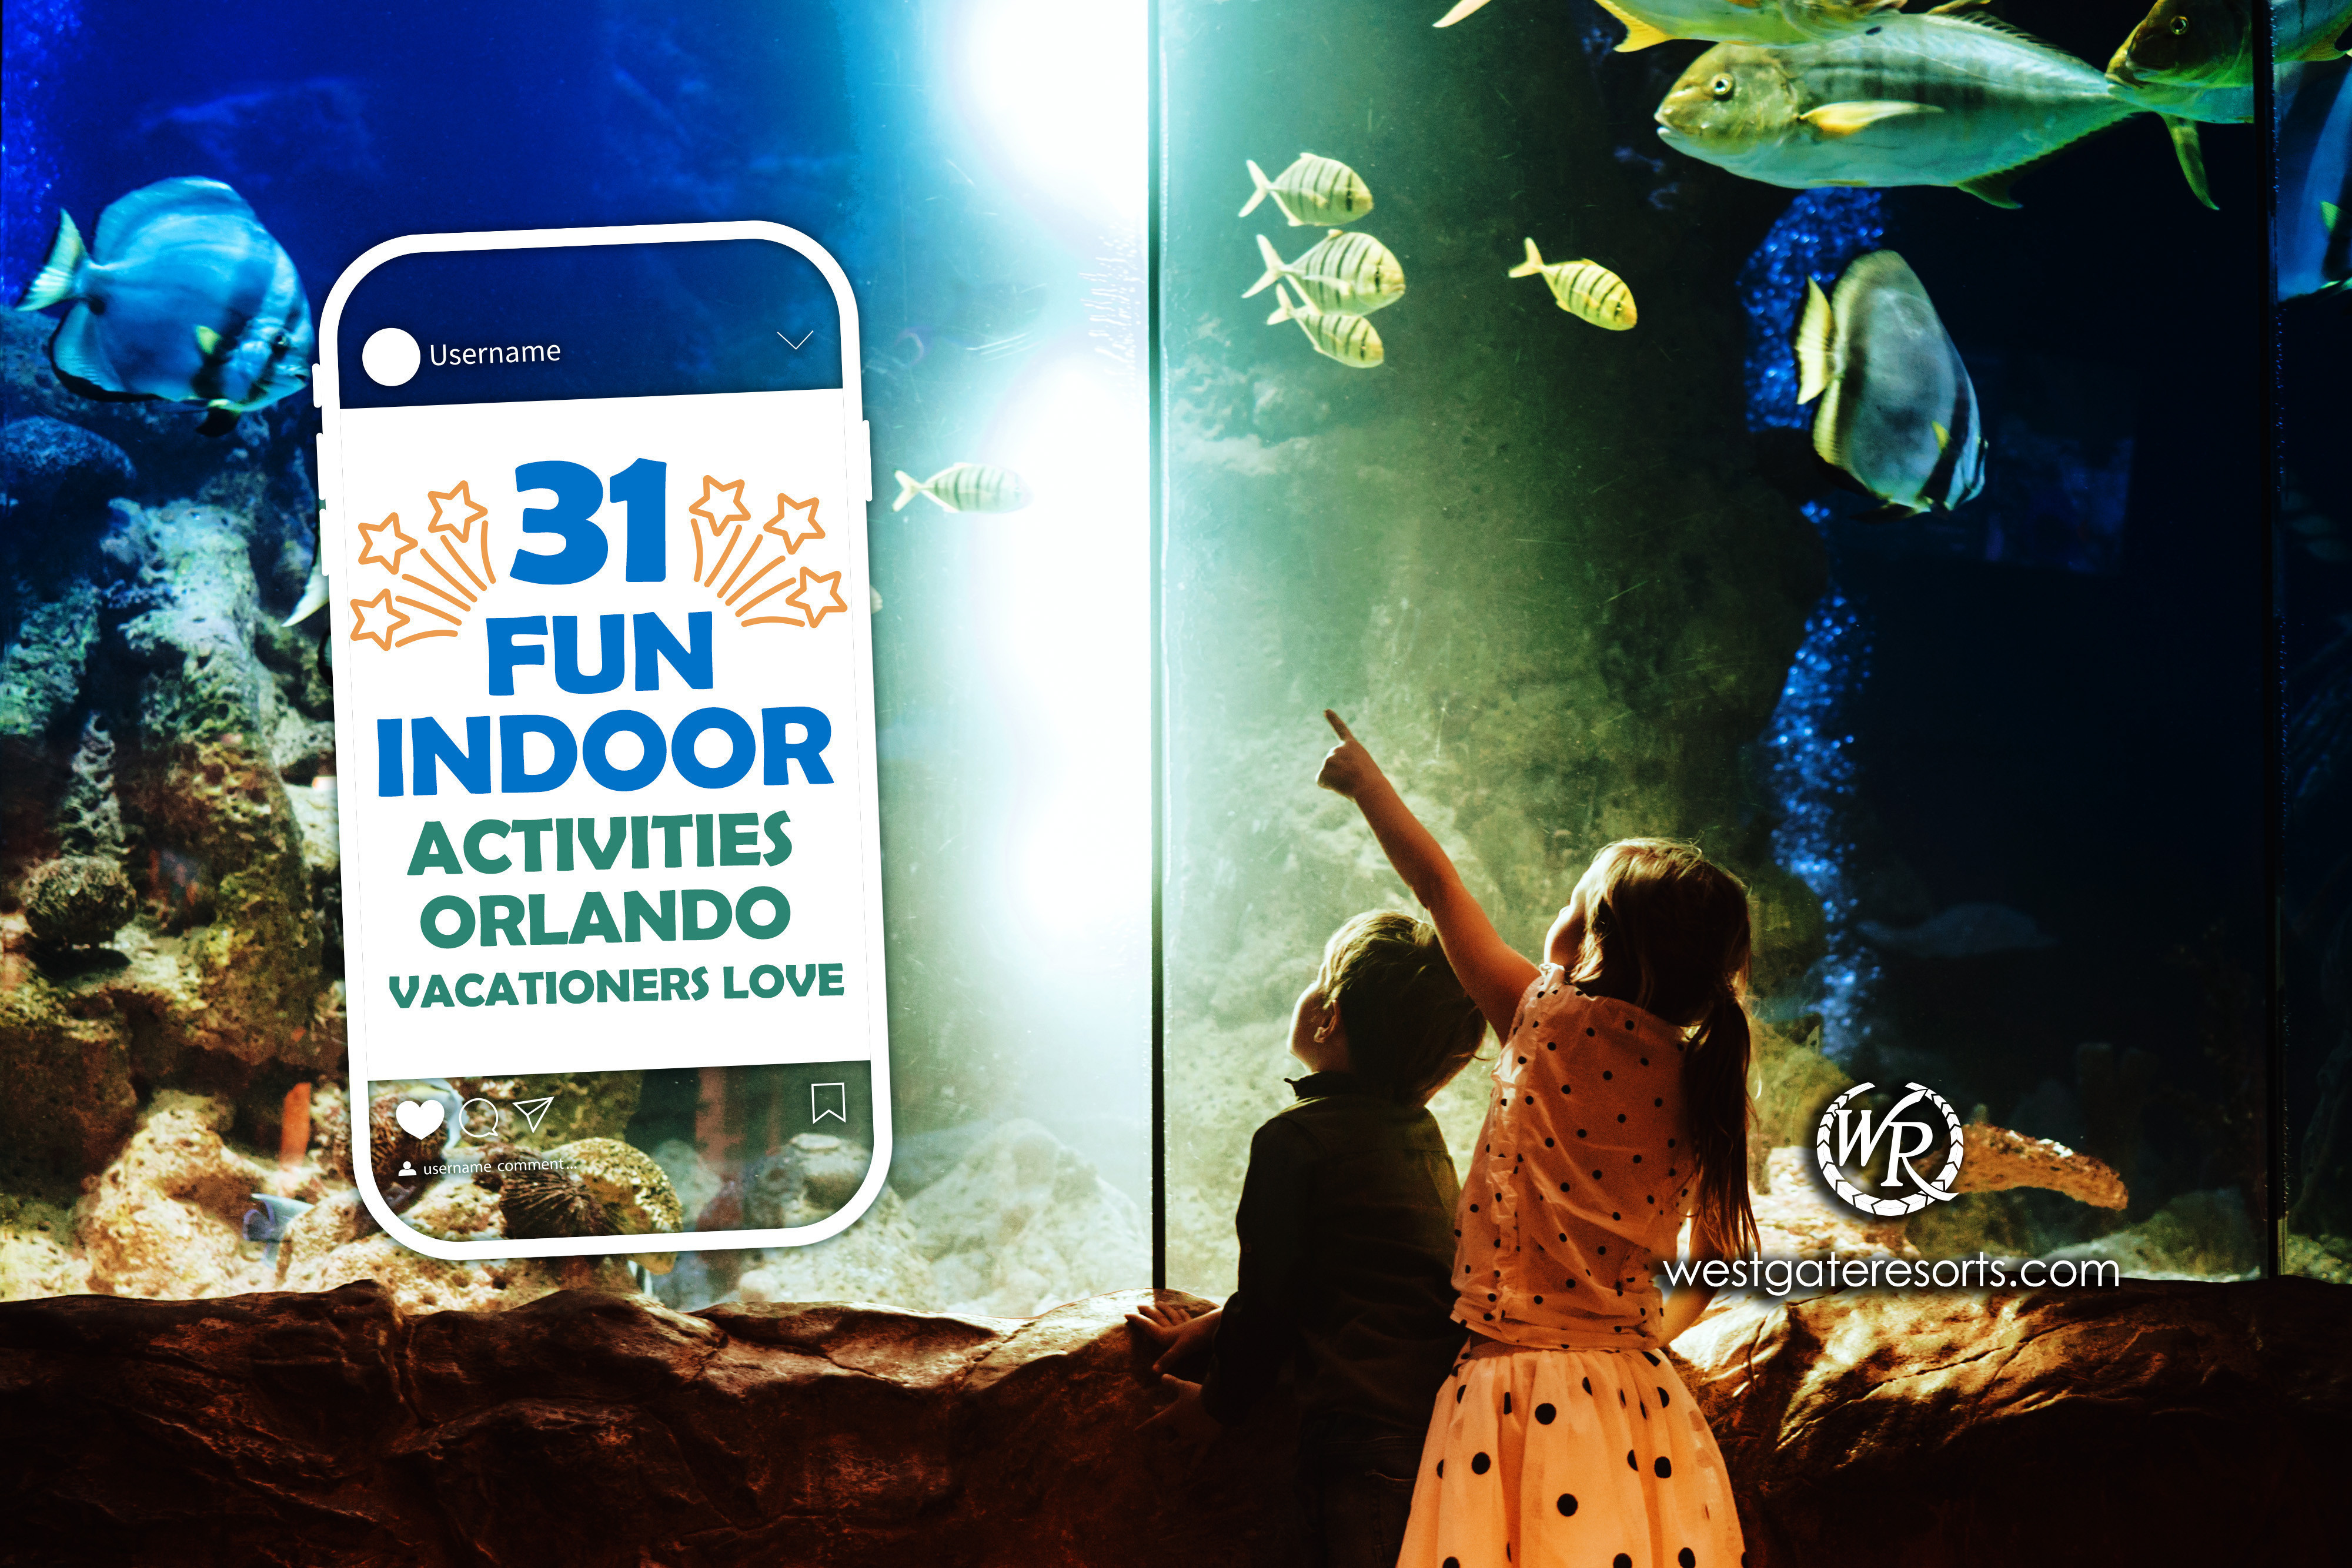 31 Fun Indoor Activities Orlando Vacationers Love